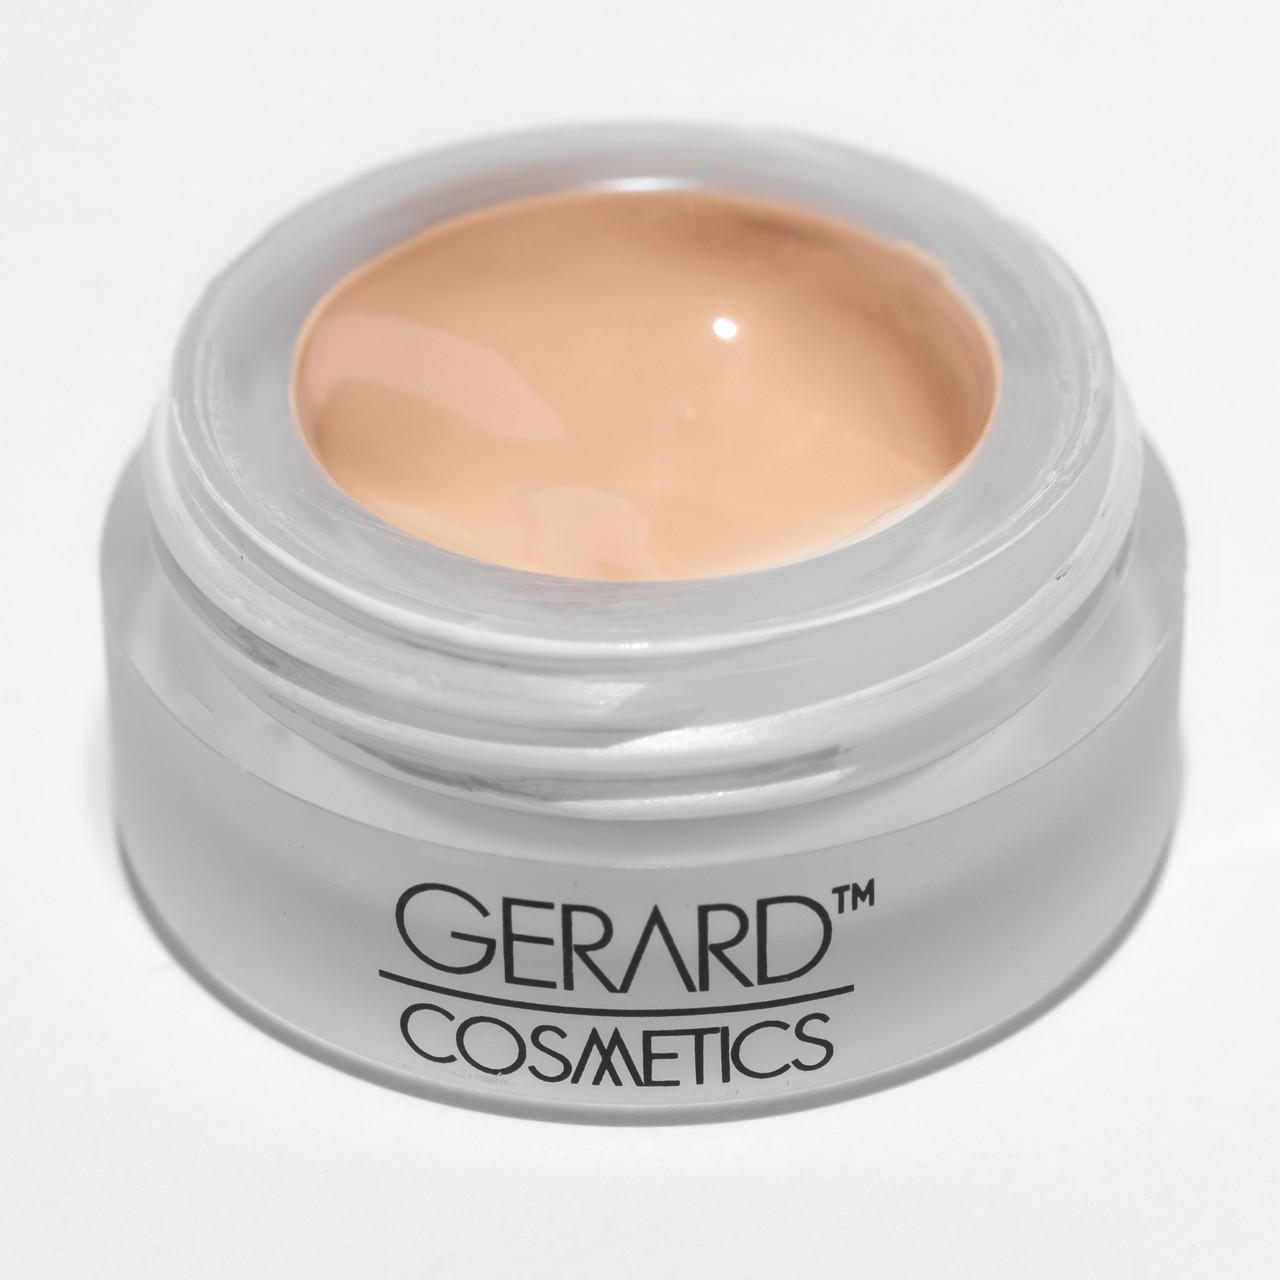 Gerard Cosmetics Clean Canvas Eye Concealer & Base Fair